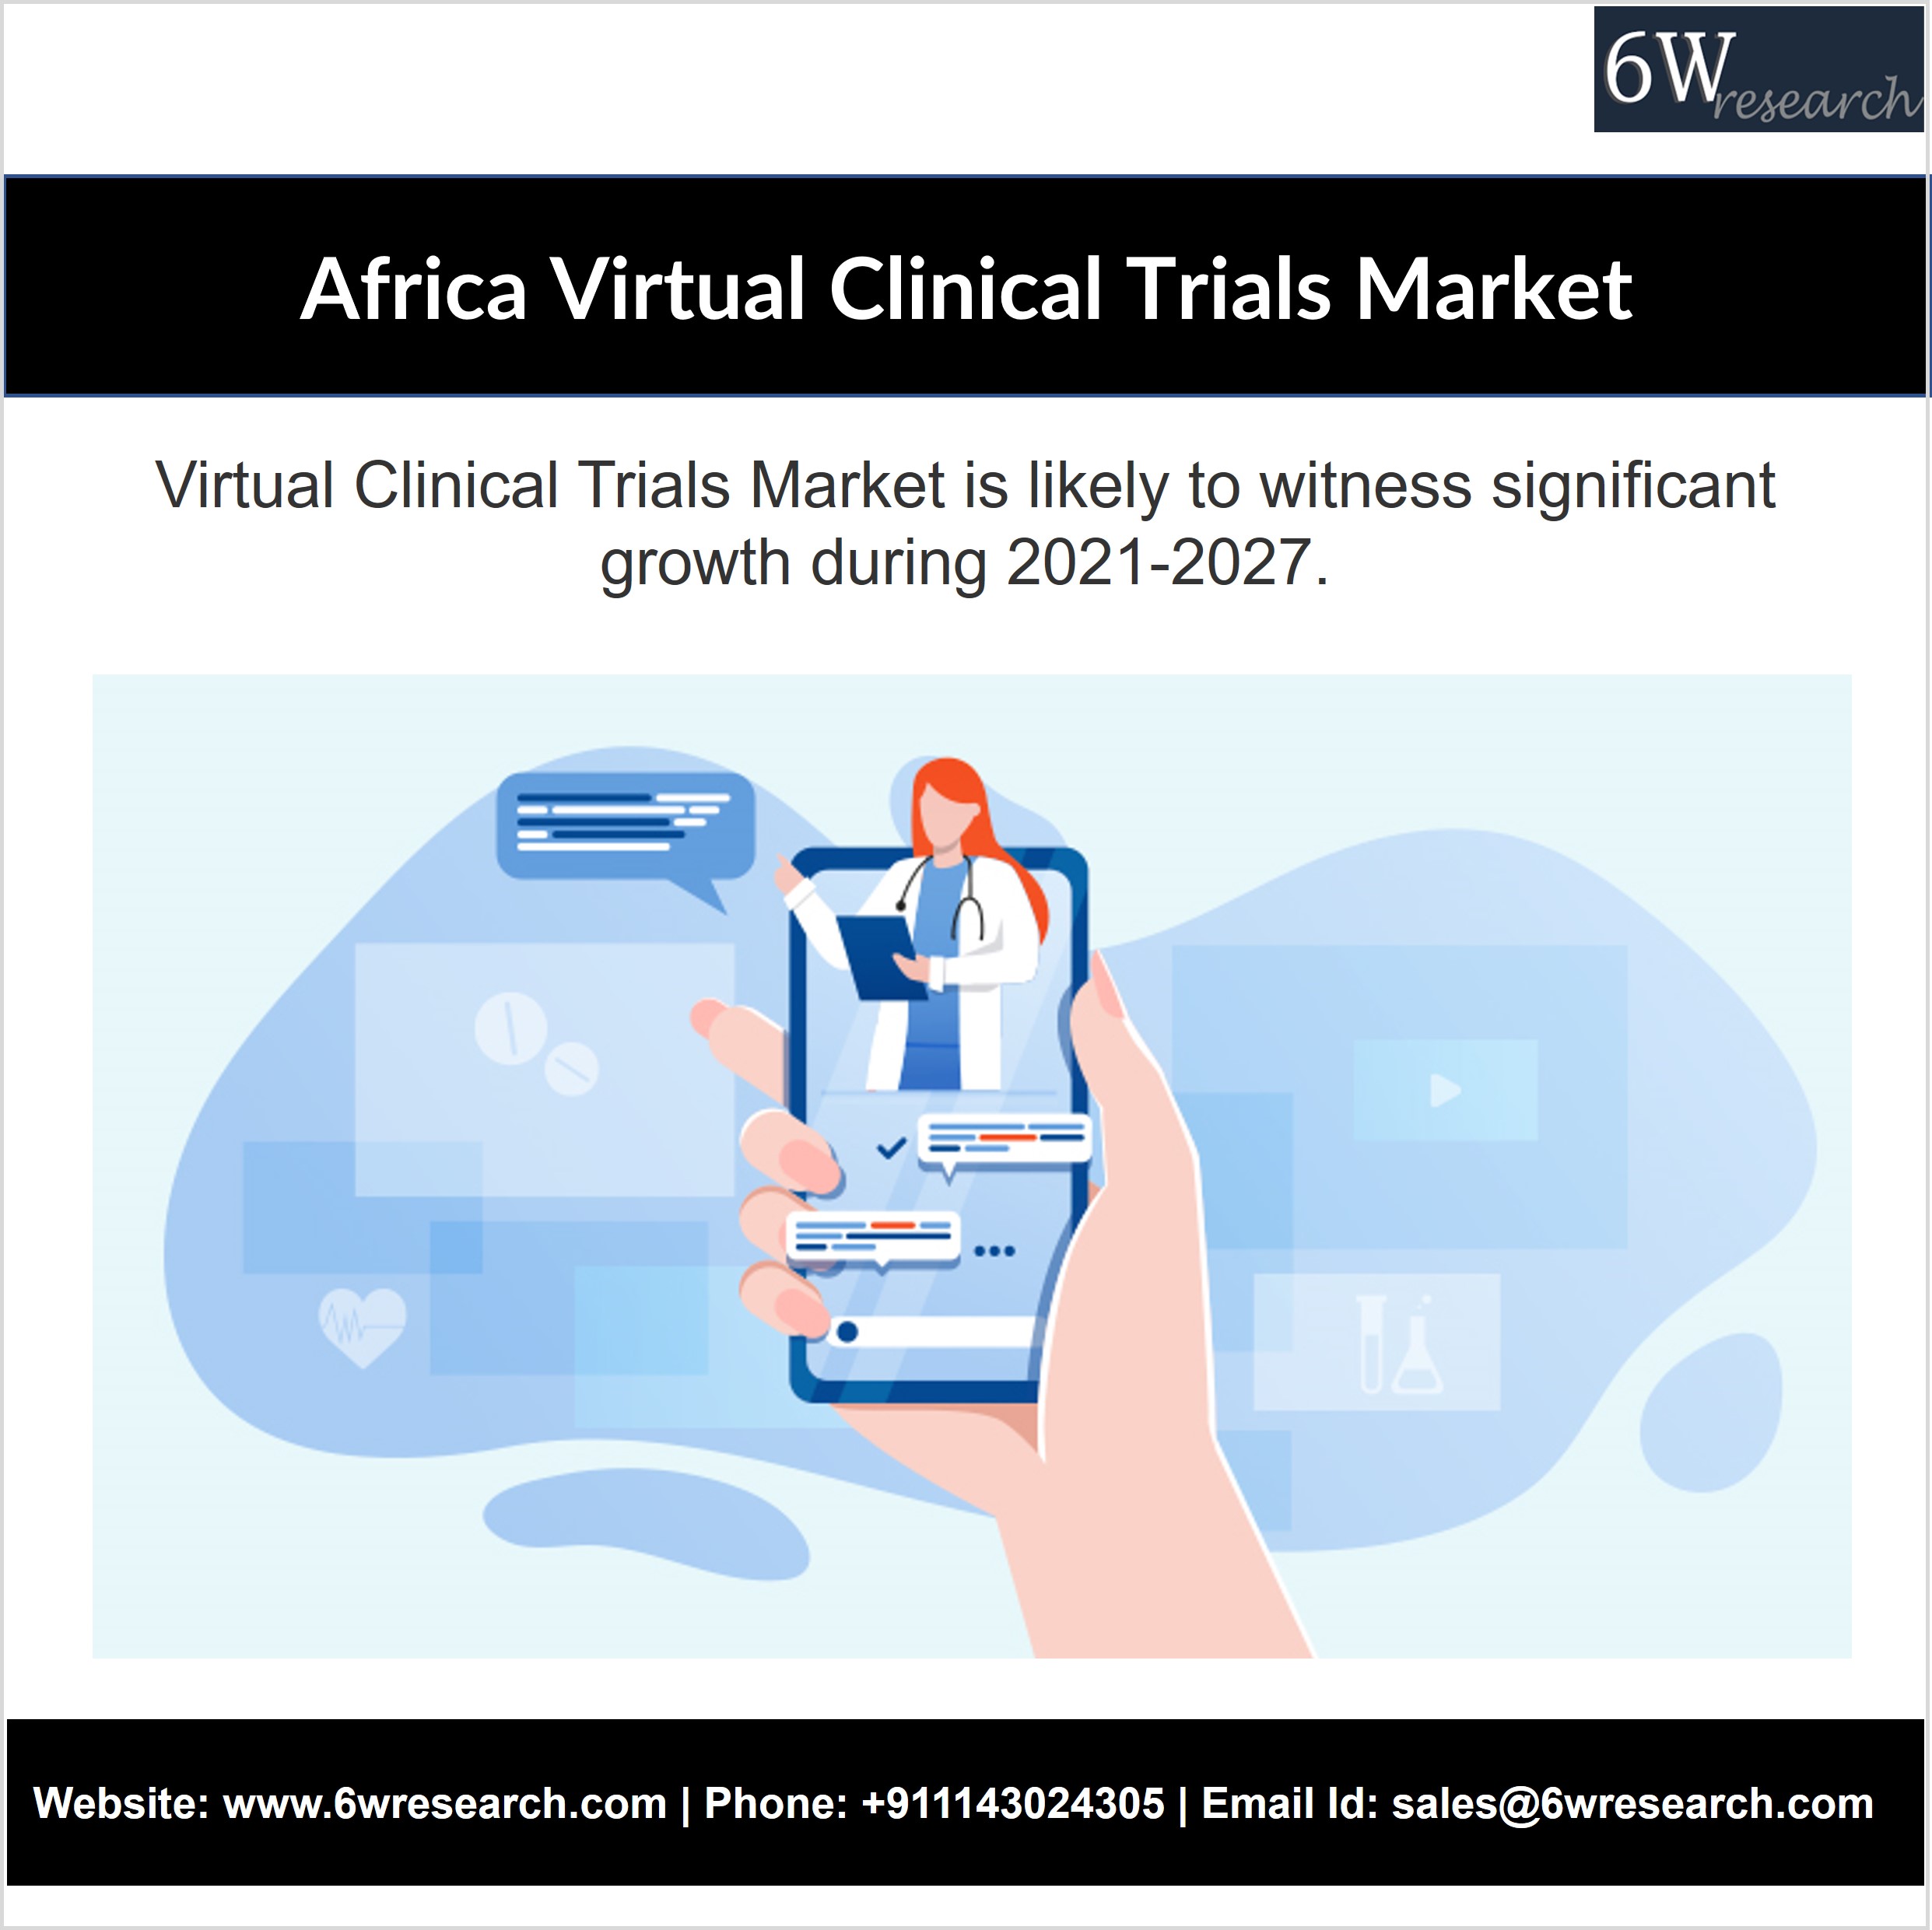 Africa Virtual Clinical Trials Market